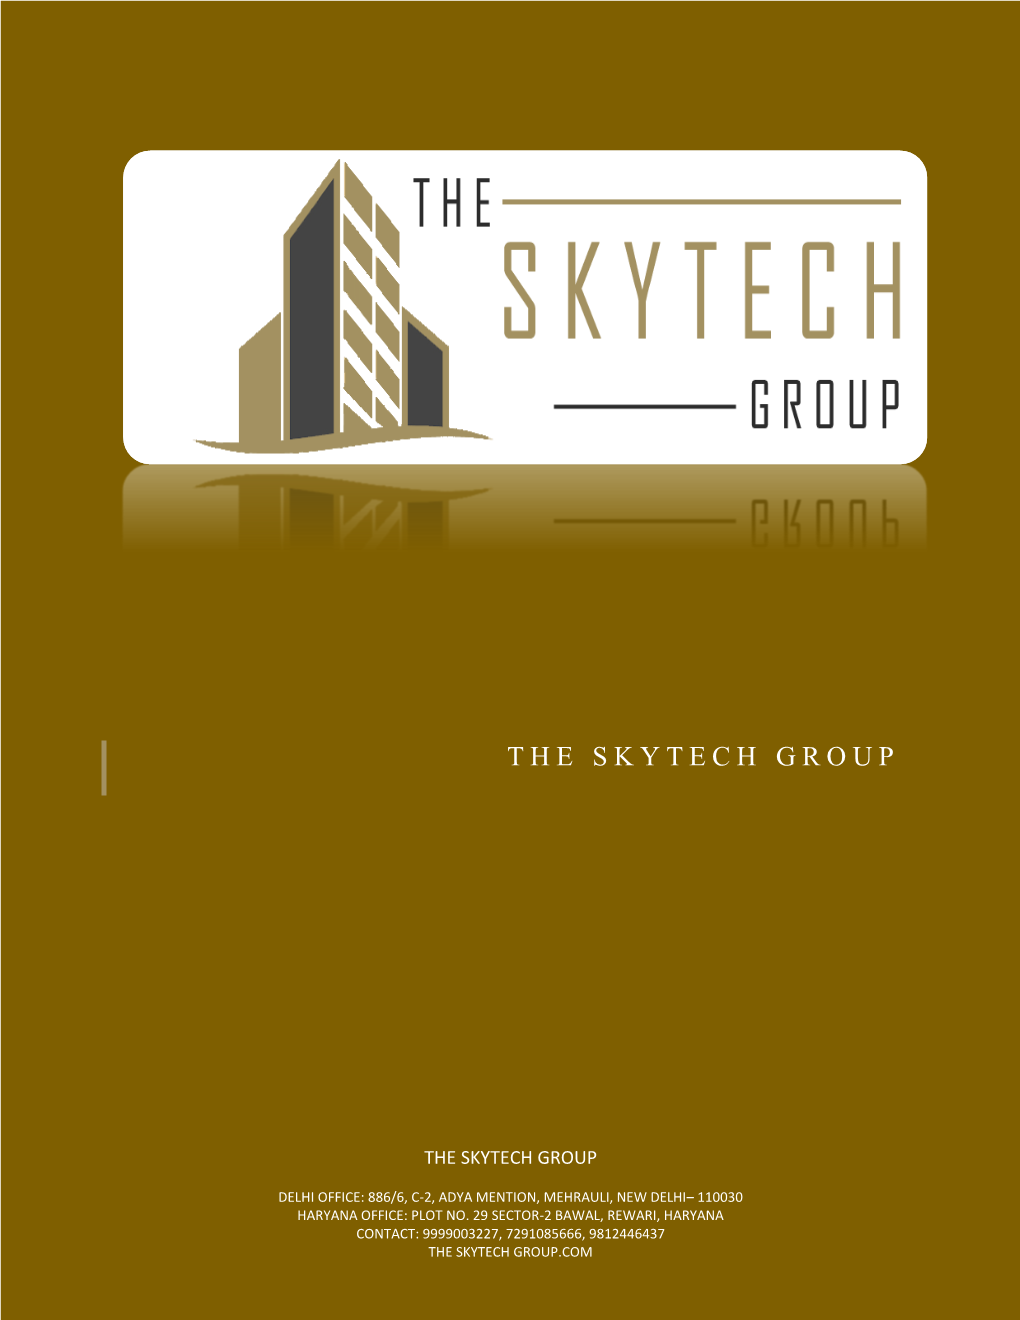 The Skytech Group